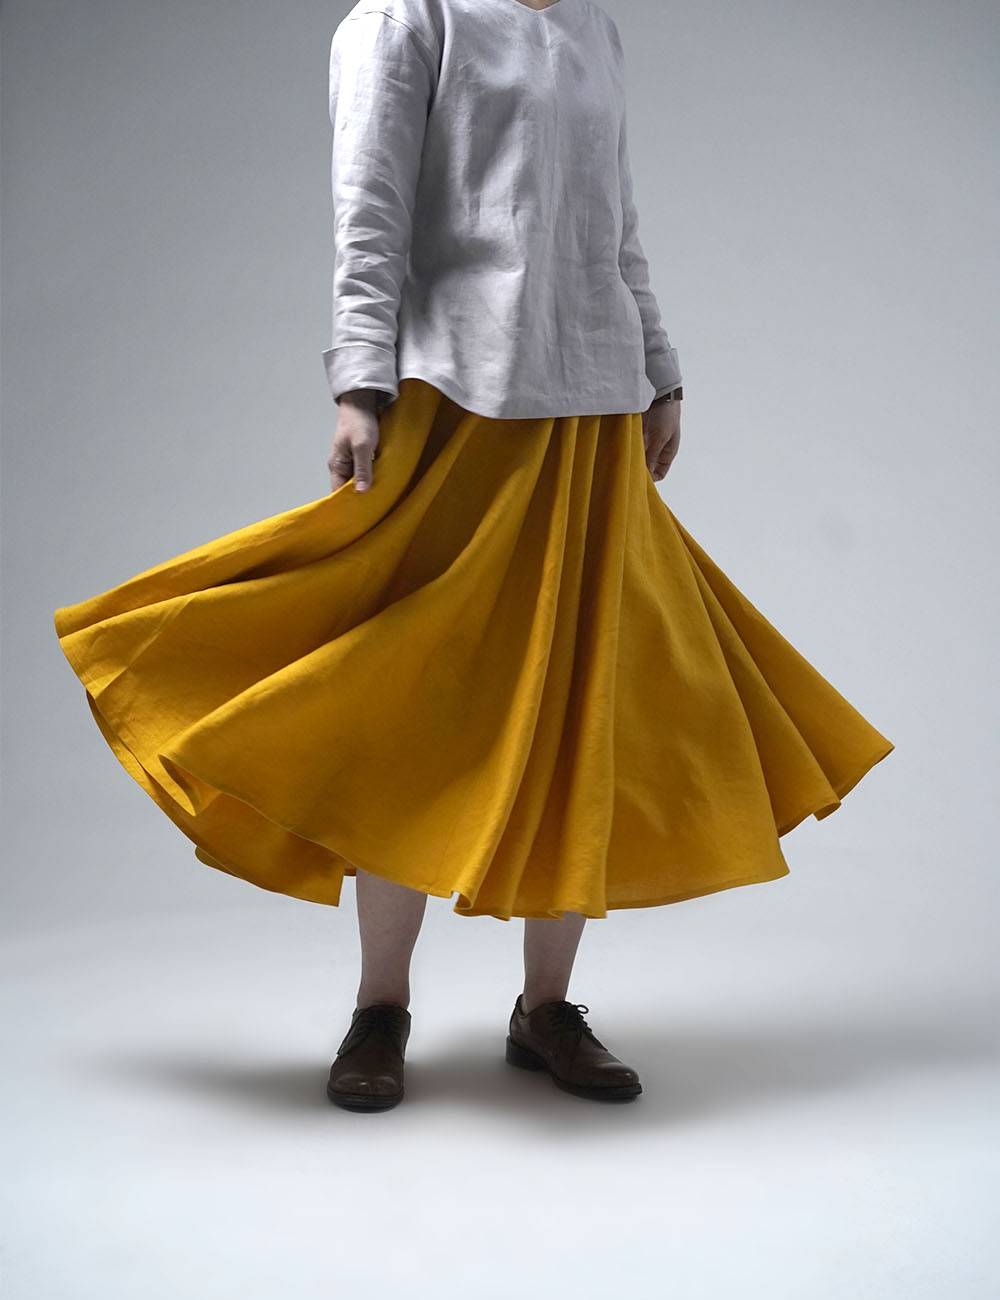 【wafu】Linen Skirt リネン サーキュラースカート/山吹色(やまぶきいろ) s002f-ybk1